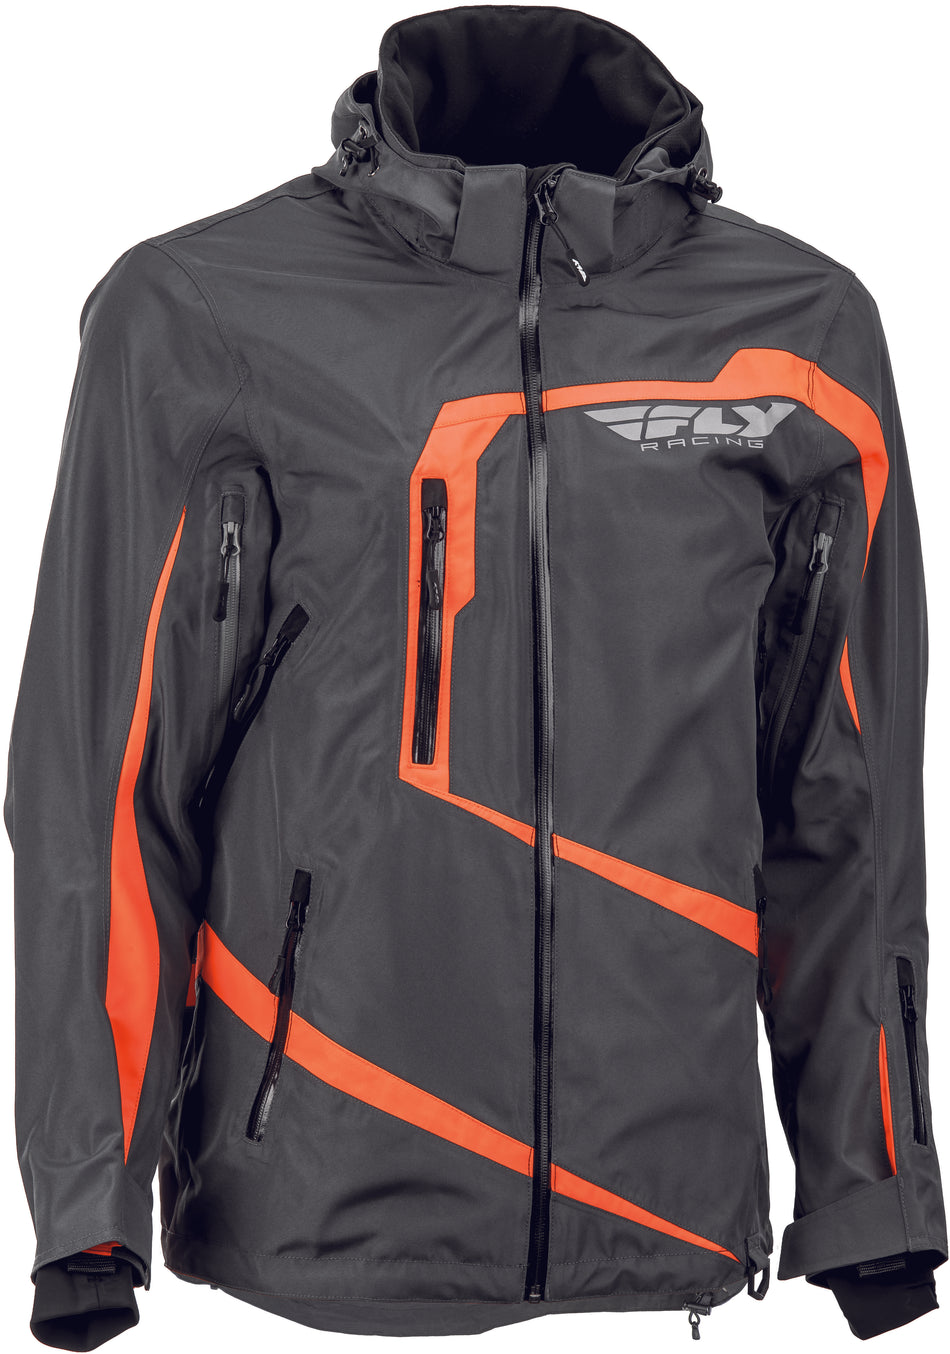 FLY RACING Fly Carbon Jacket Grey/Orange Sm 470-4048S